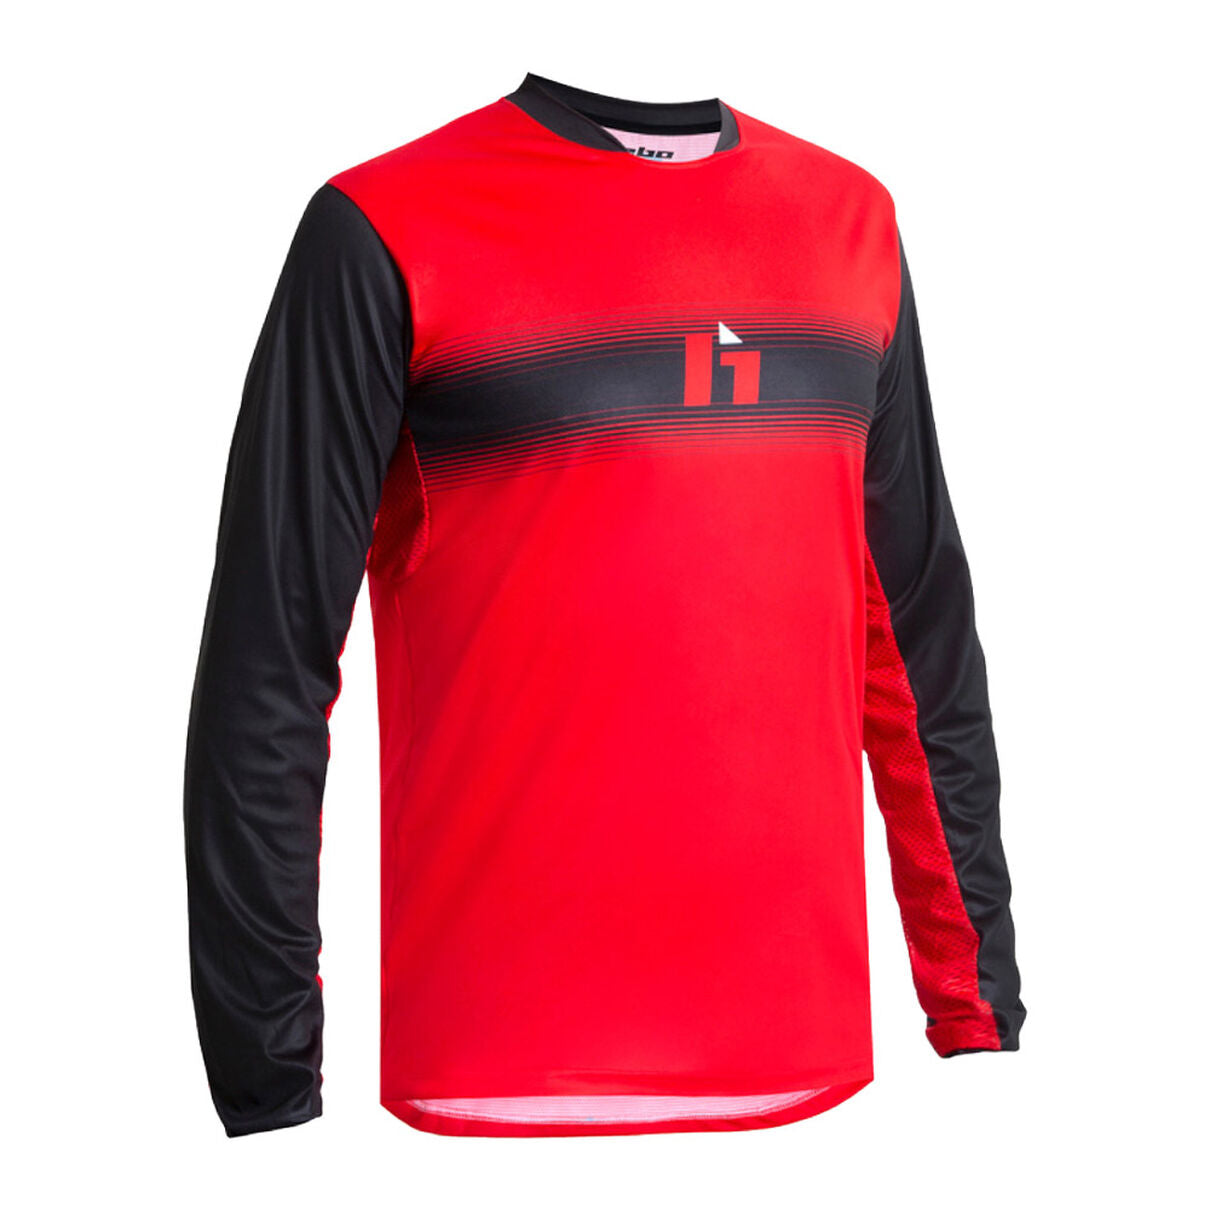 Hebo Trials Shirt Tech Red